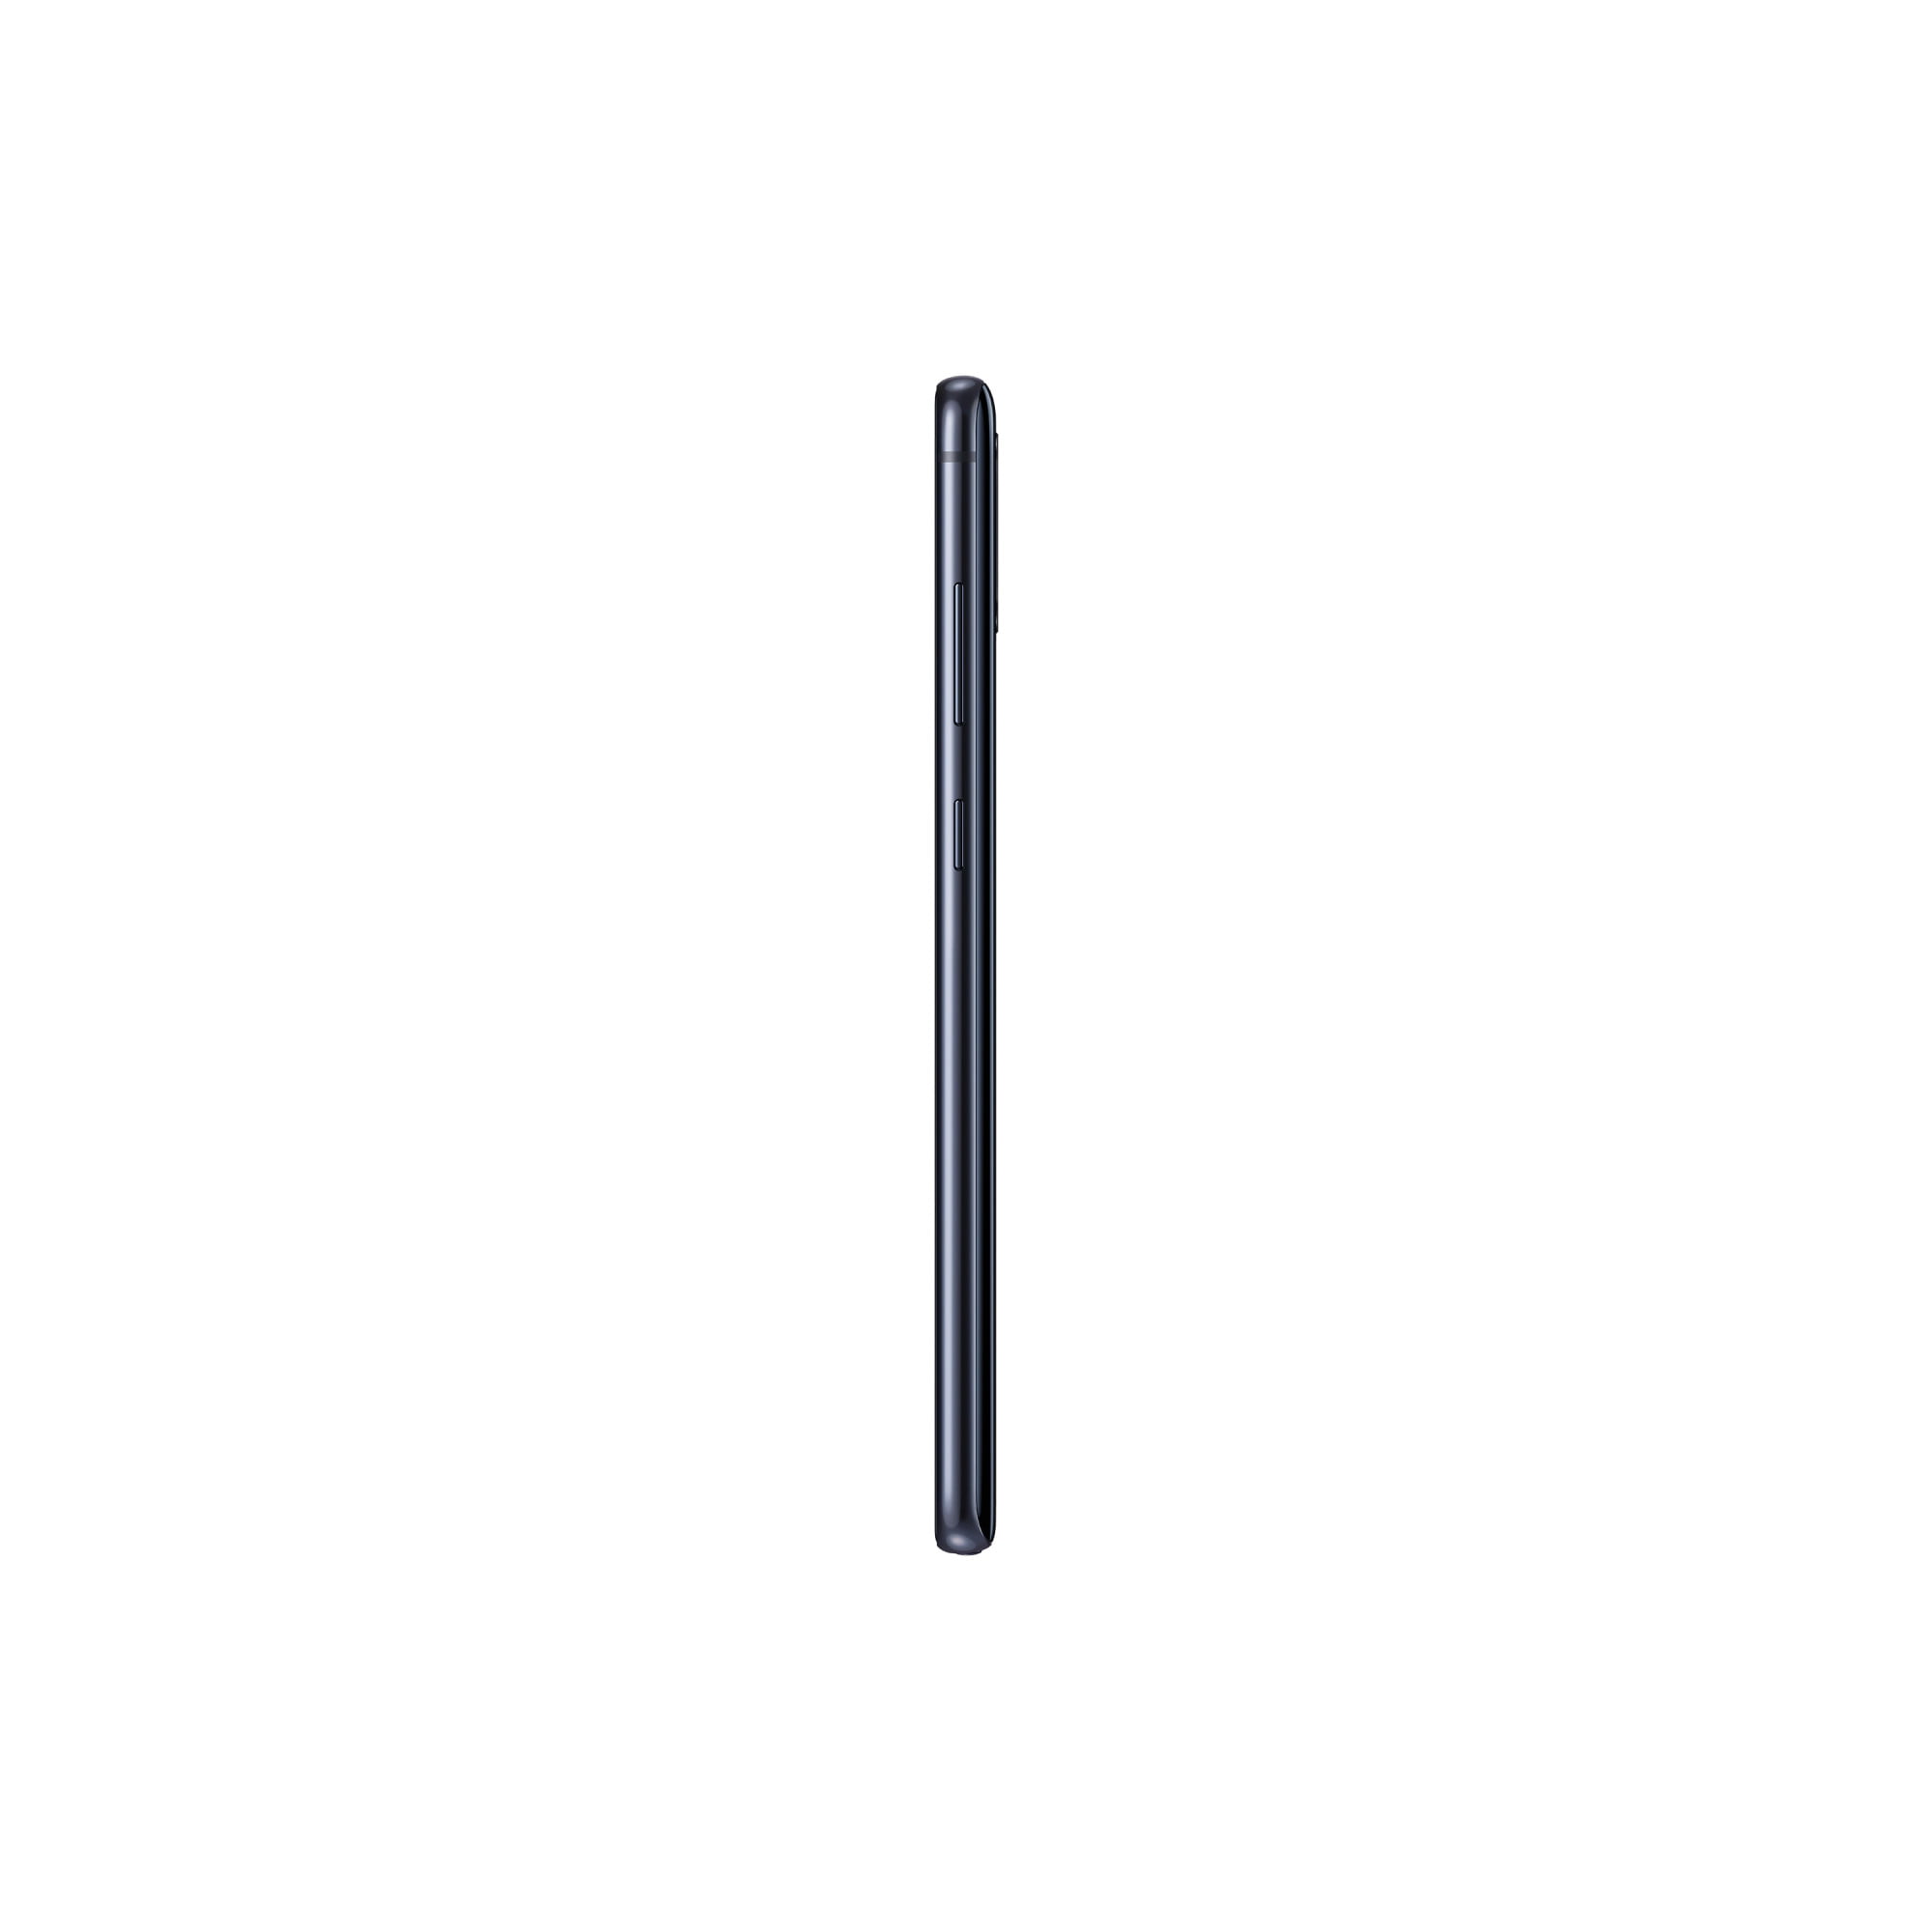 Samsung Galaxy Note 10 Lite N770F 128GB Dual-SIM GSM Unlocked Phone  (International Variant/US Compatible LTE) - Aura Black (Renewed)